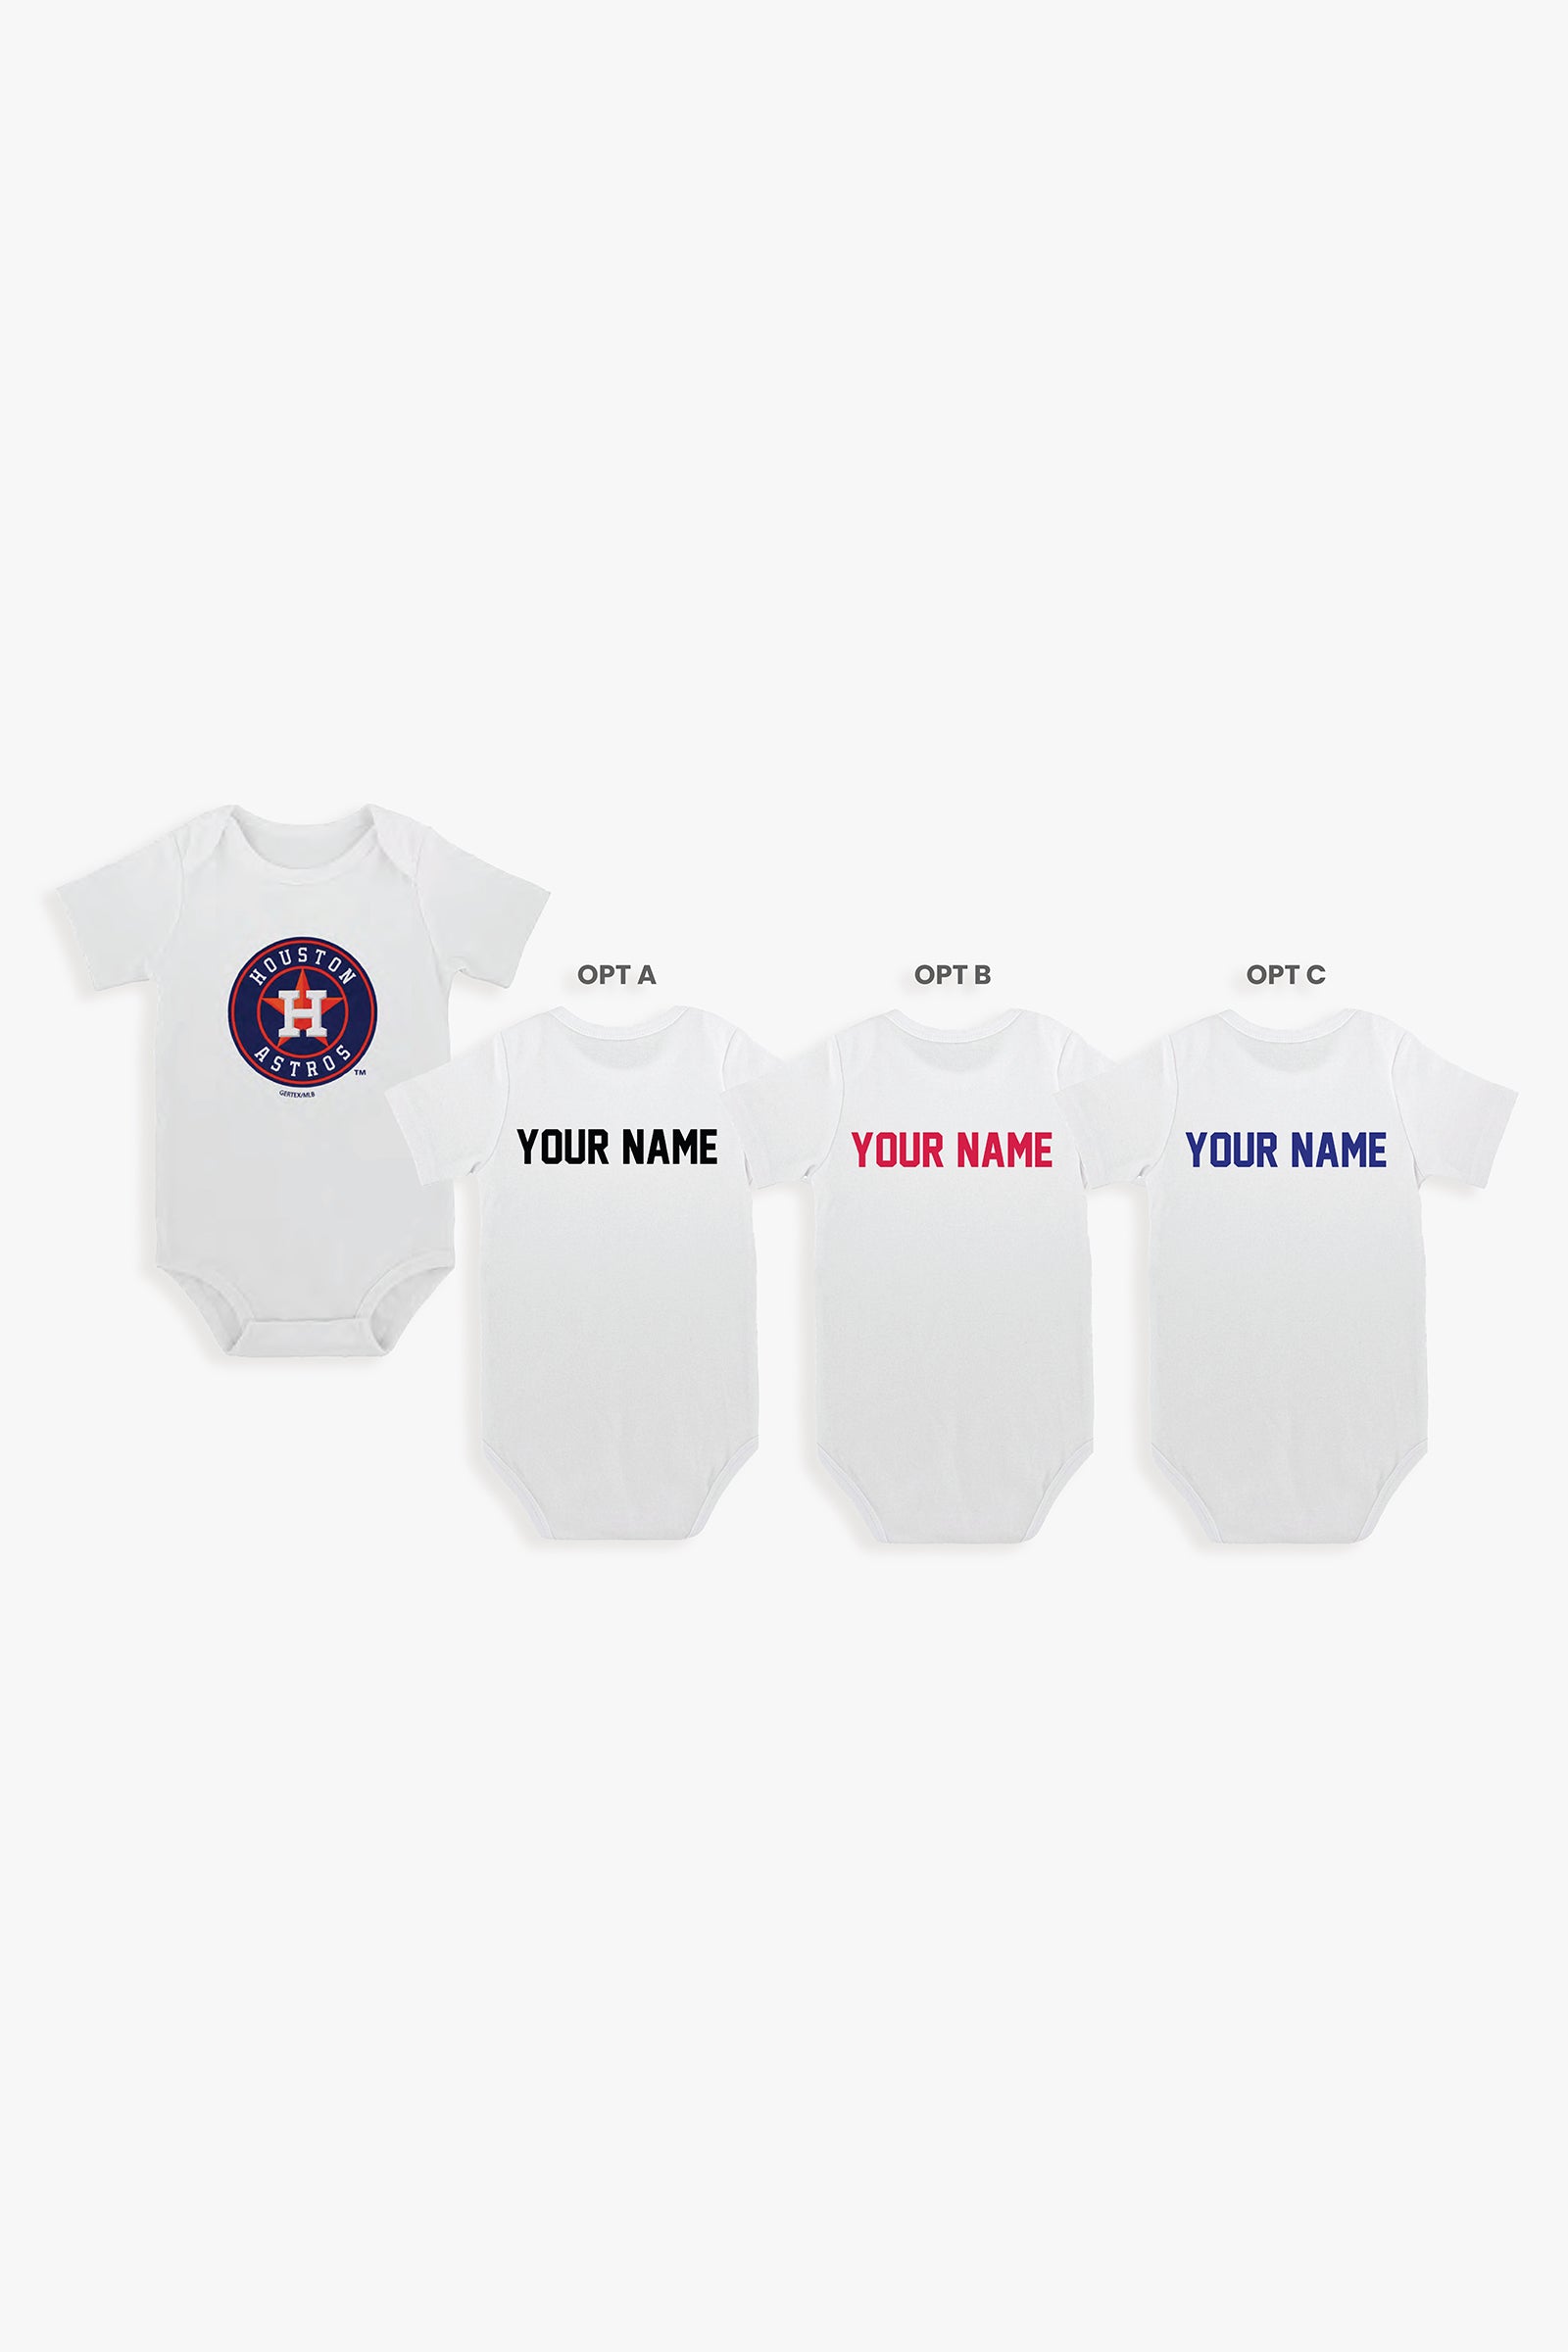 Customizable MLB Baby Bodysuit in White (0-3 Months)